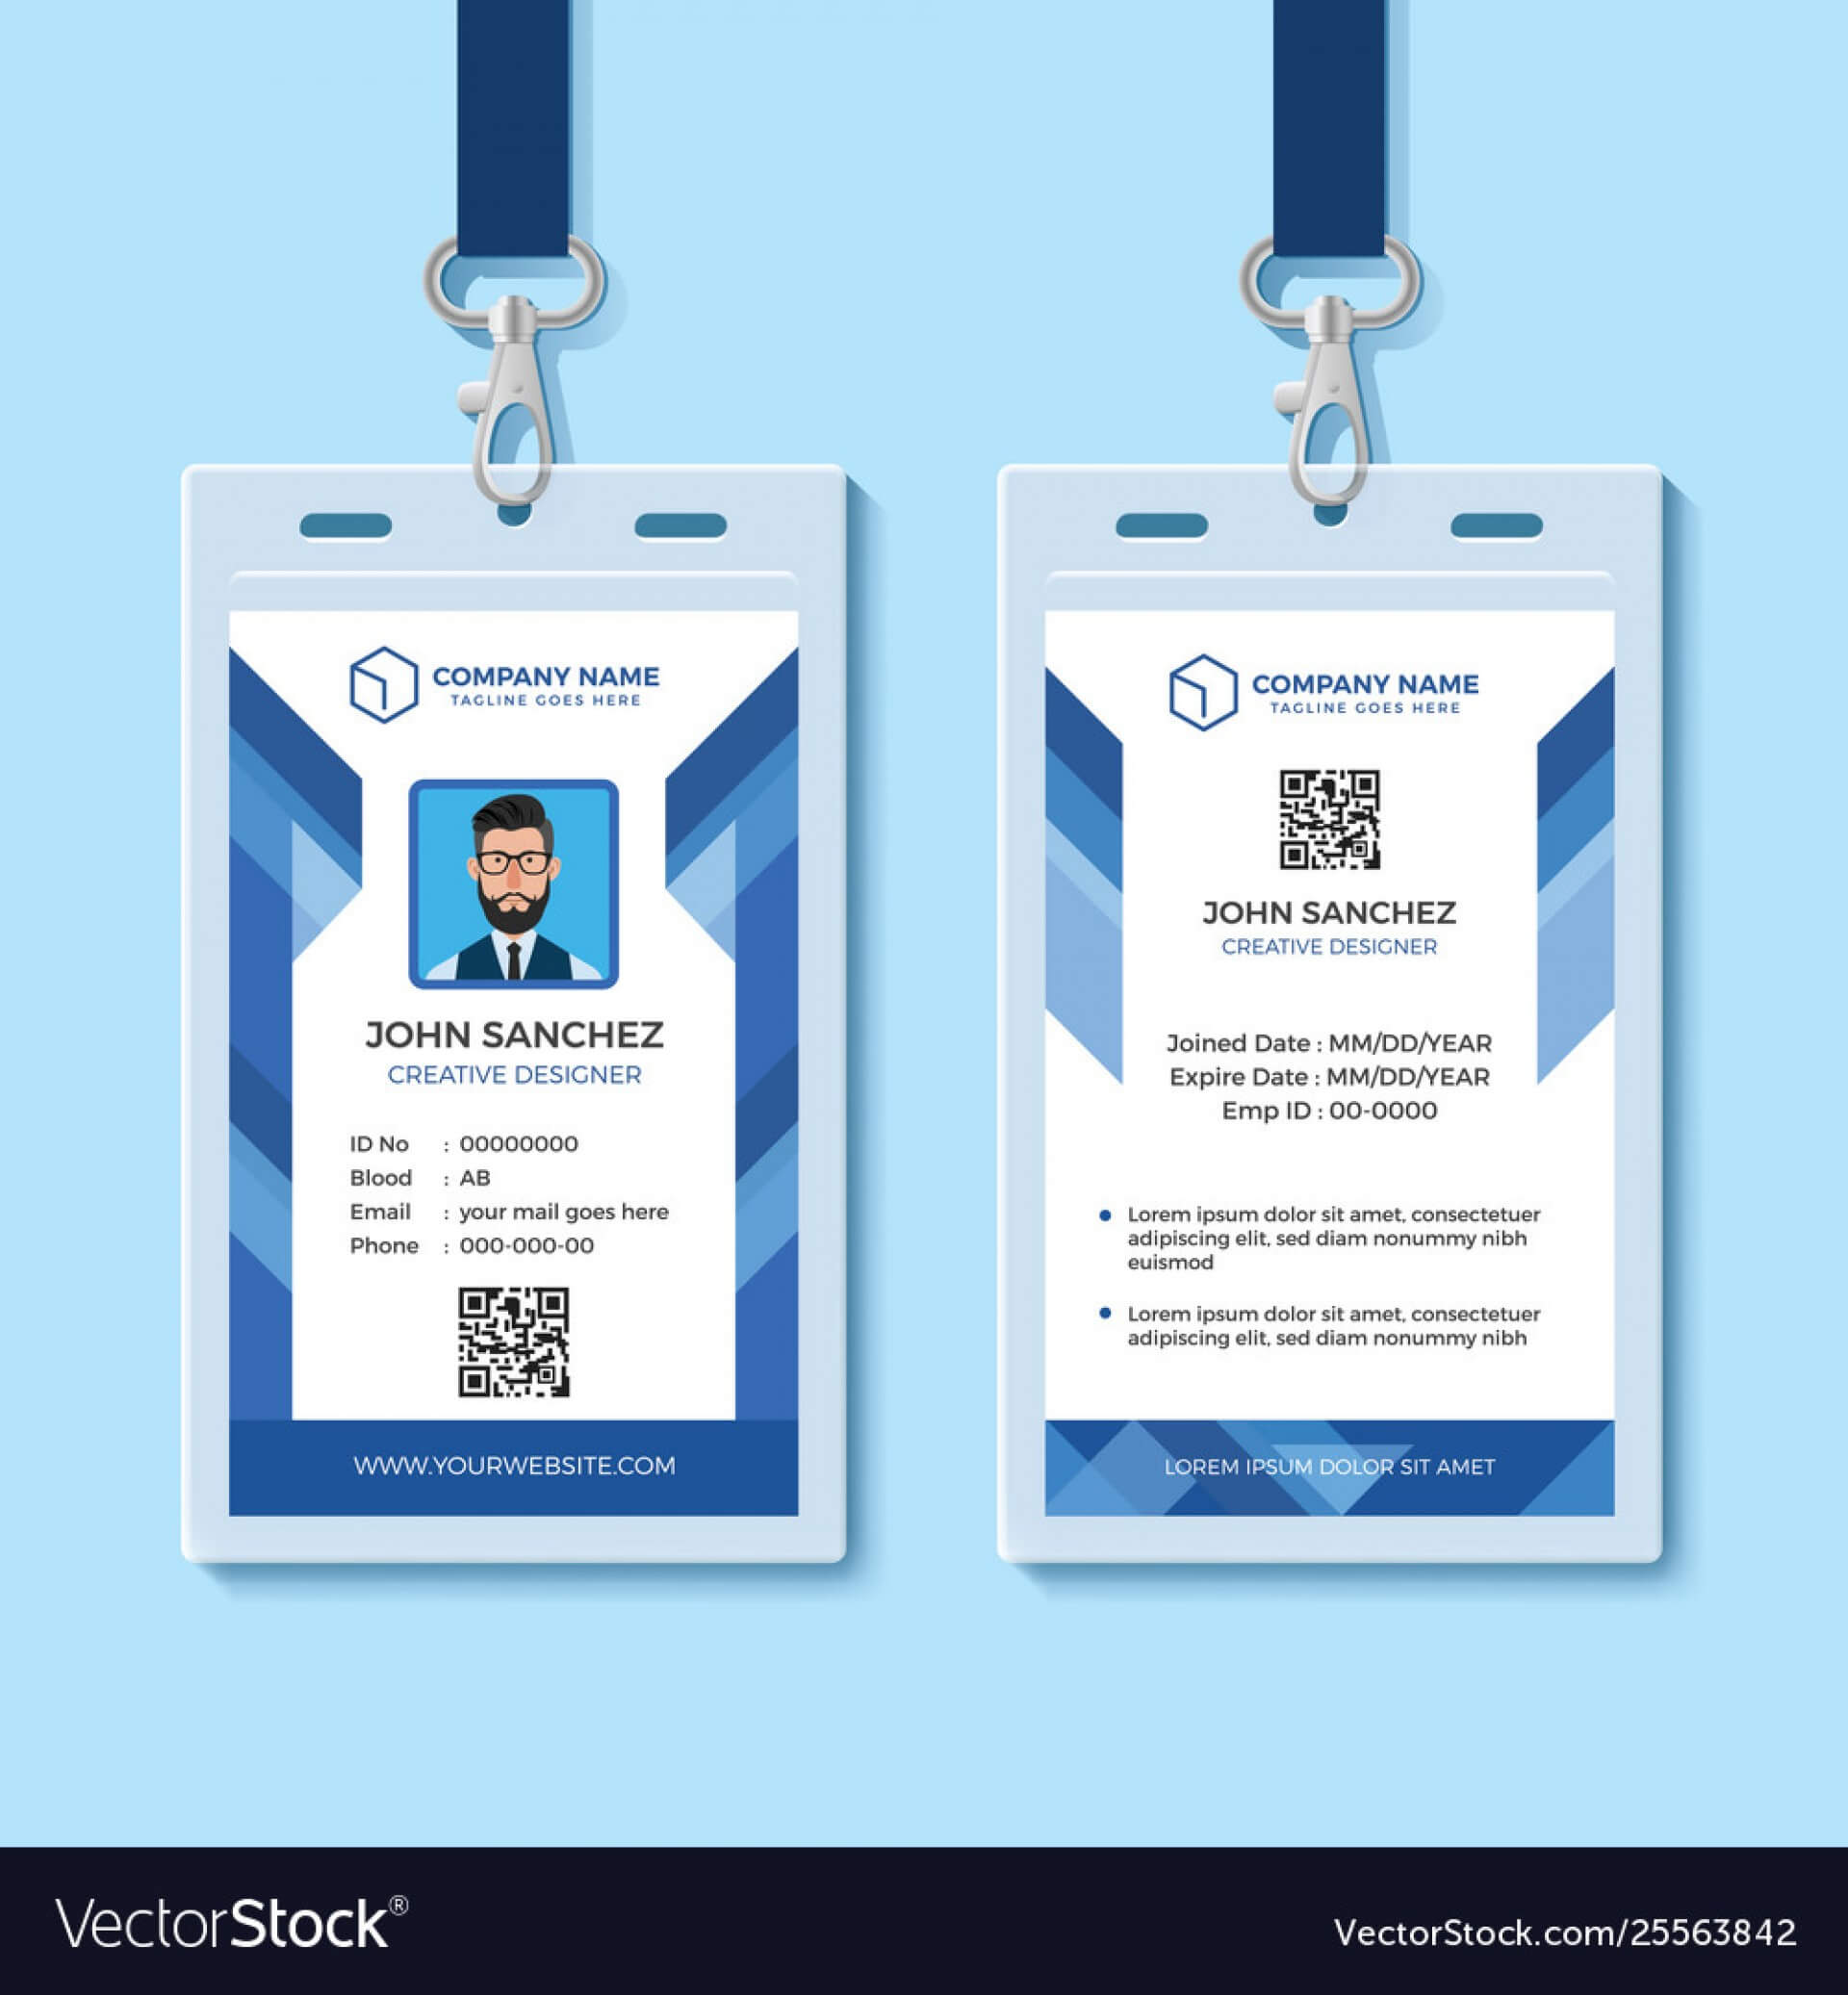 042 Template Ideas Employee Id Card Templates Blue Design Inside Id Card Template Word Free